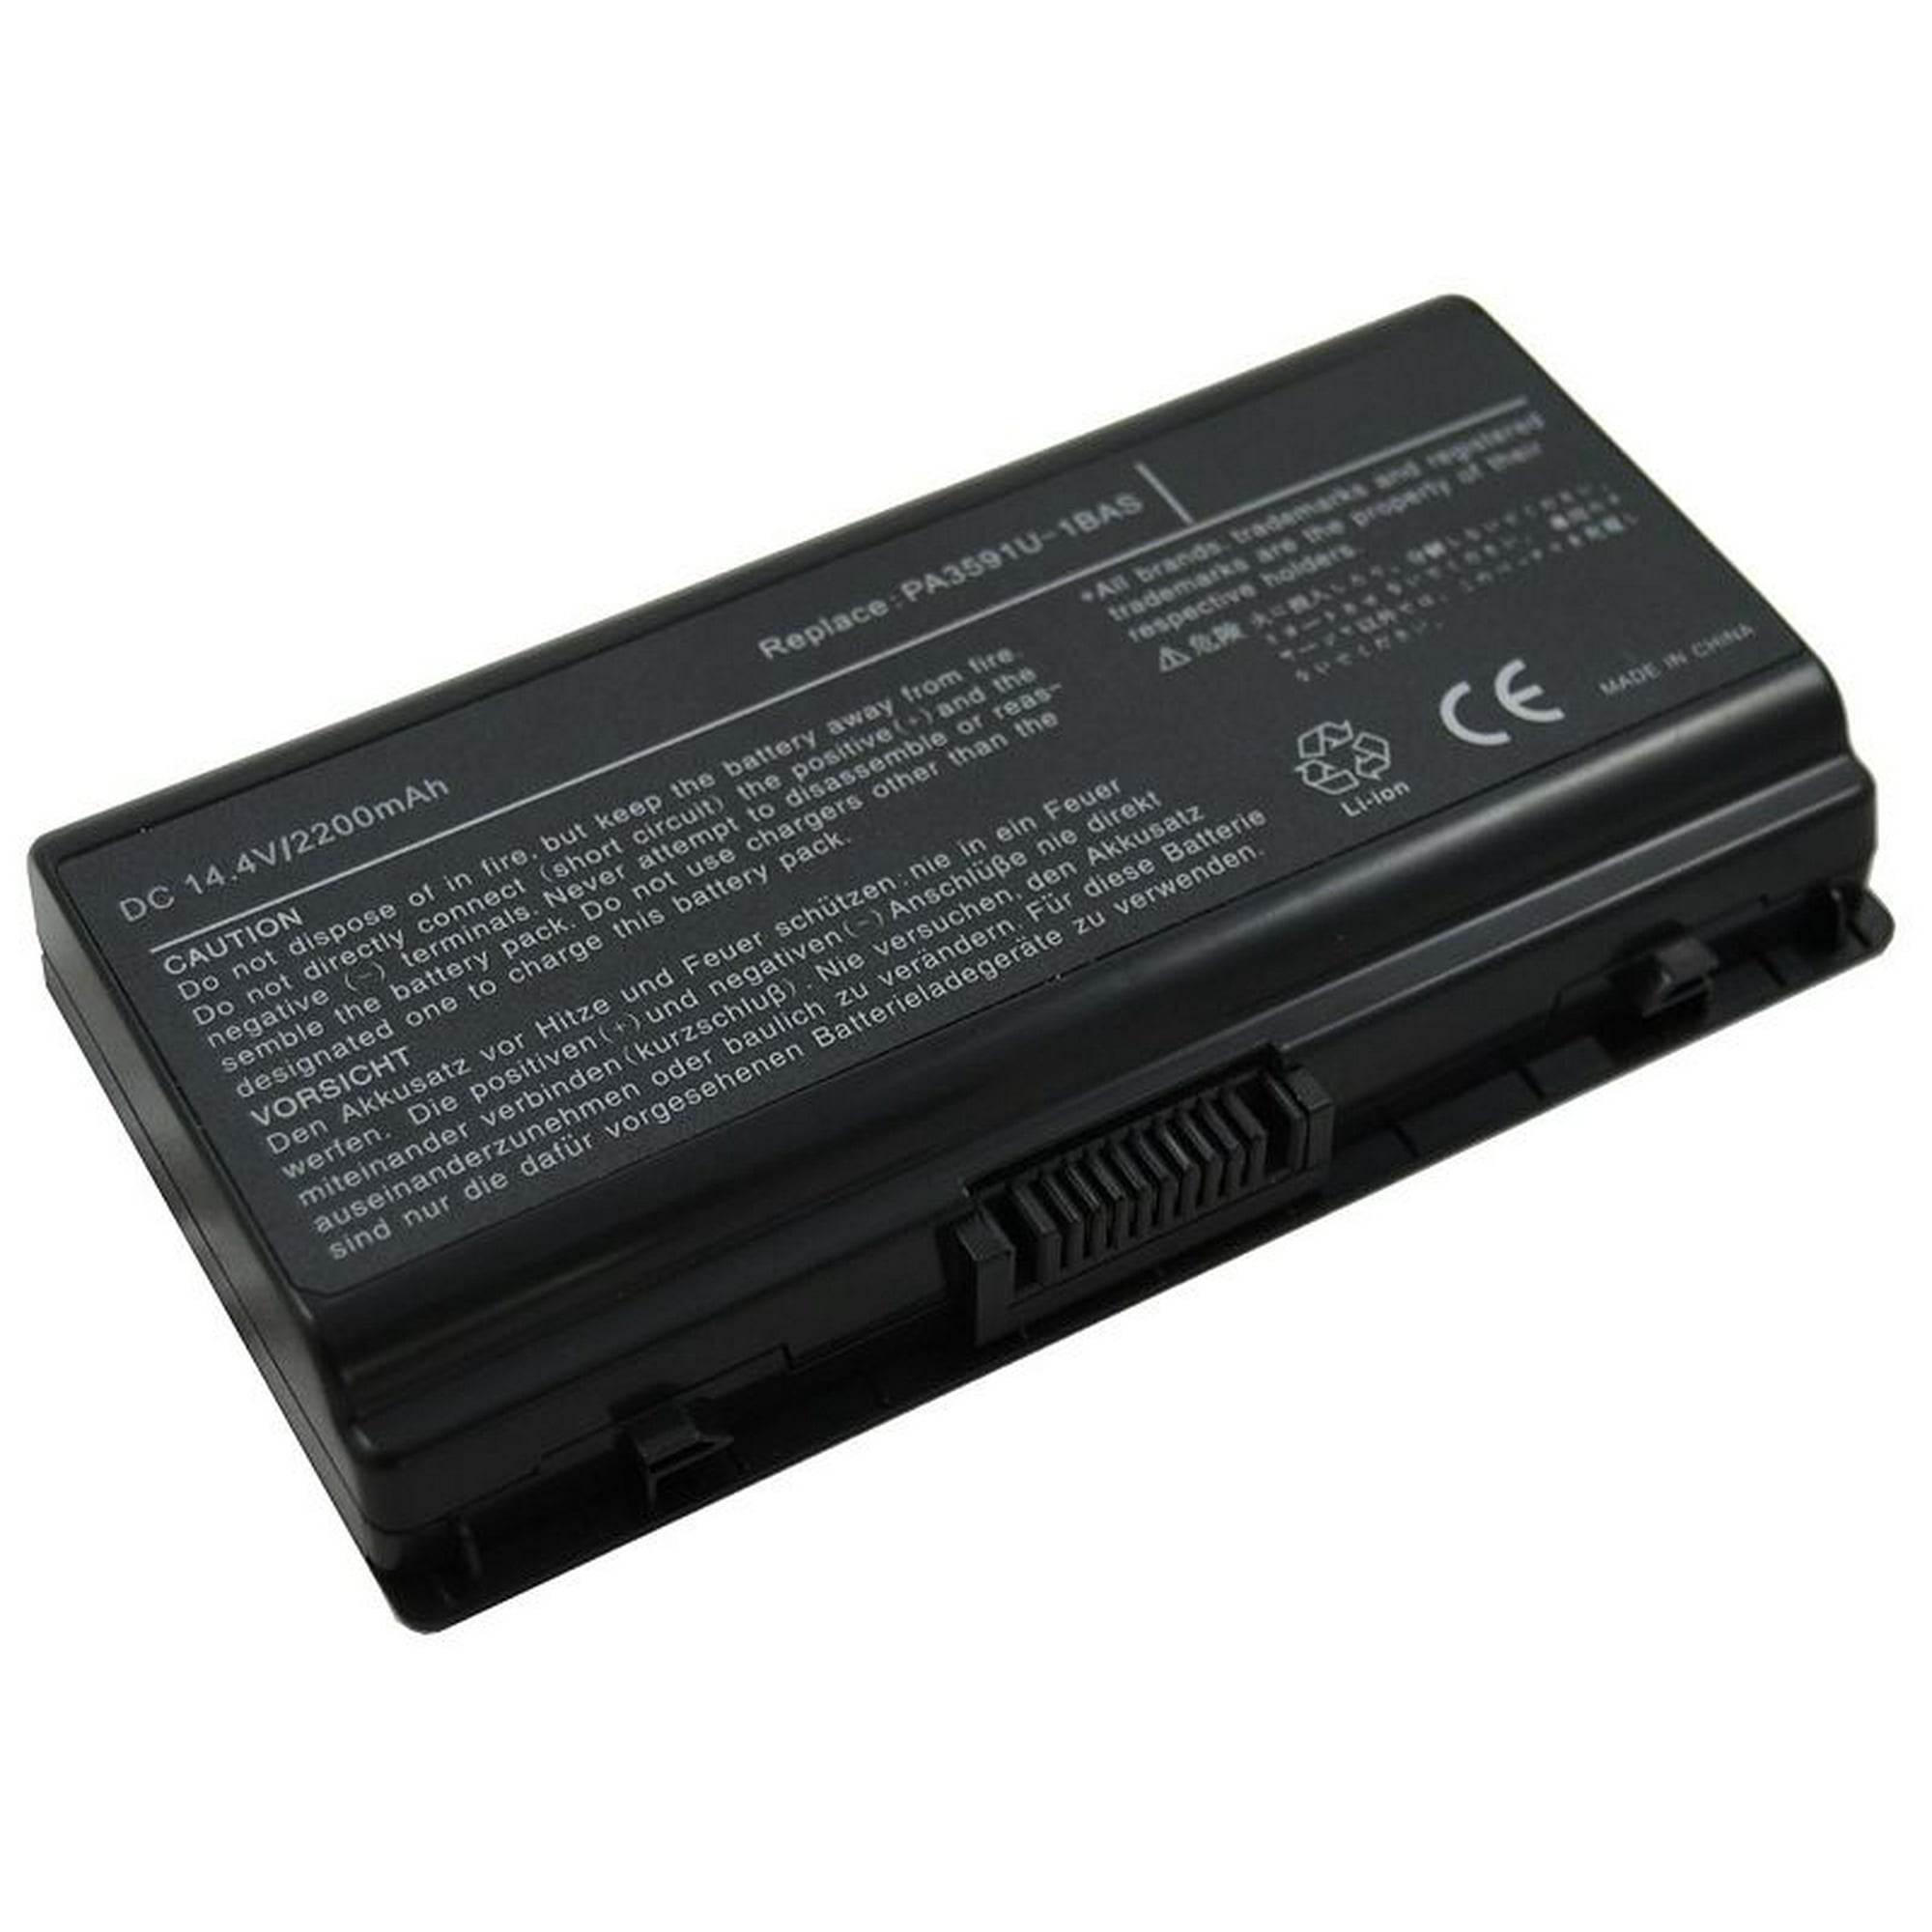 Superb Choice® Battery for TOSHIBA Satellite L45(except Satellite L45-S8xxx Series) | Walmart Canada